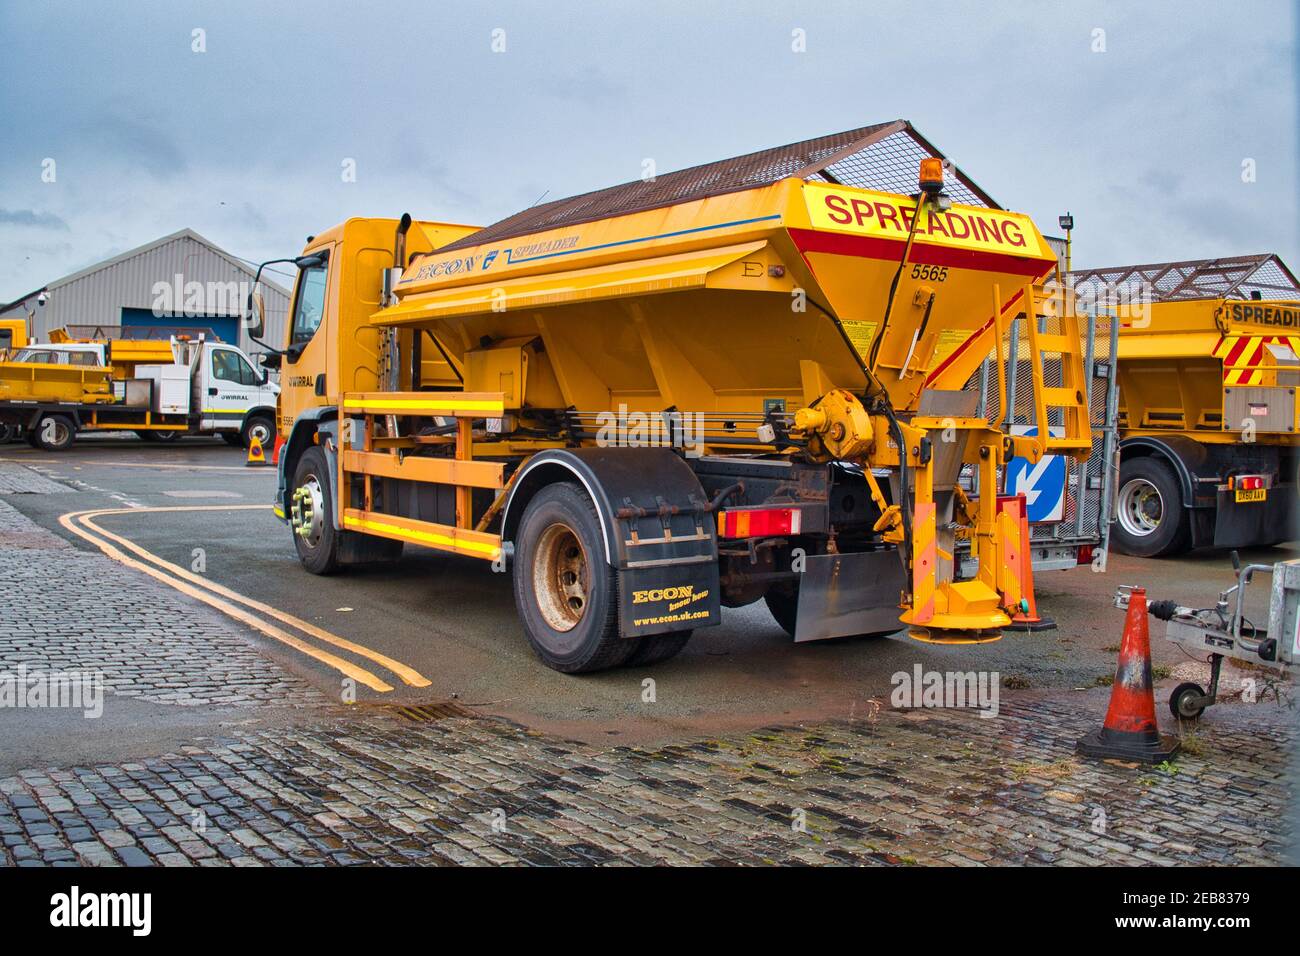 Road gritting equipment in Birkenhead, Wirral, UK Stock Photo